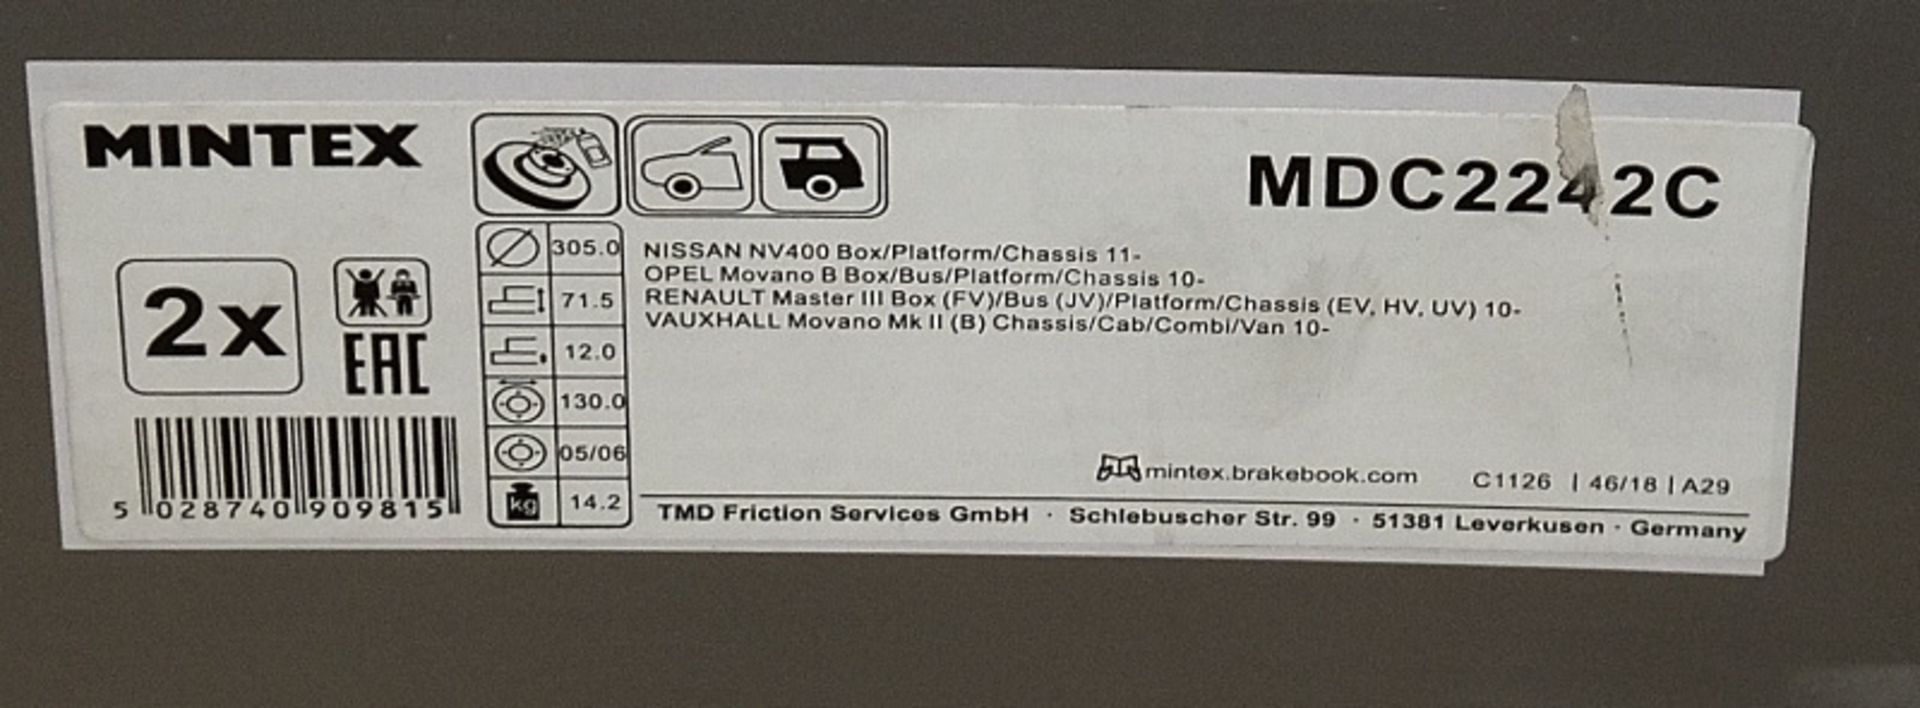 Mintex Brake Discs model numbers MDC2202C, MDC2503C, MDC2242C - Image 4 of 4